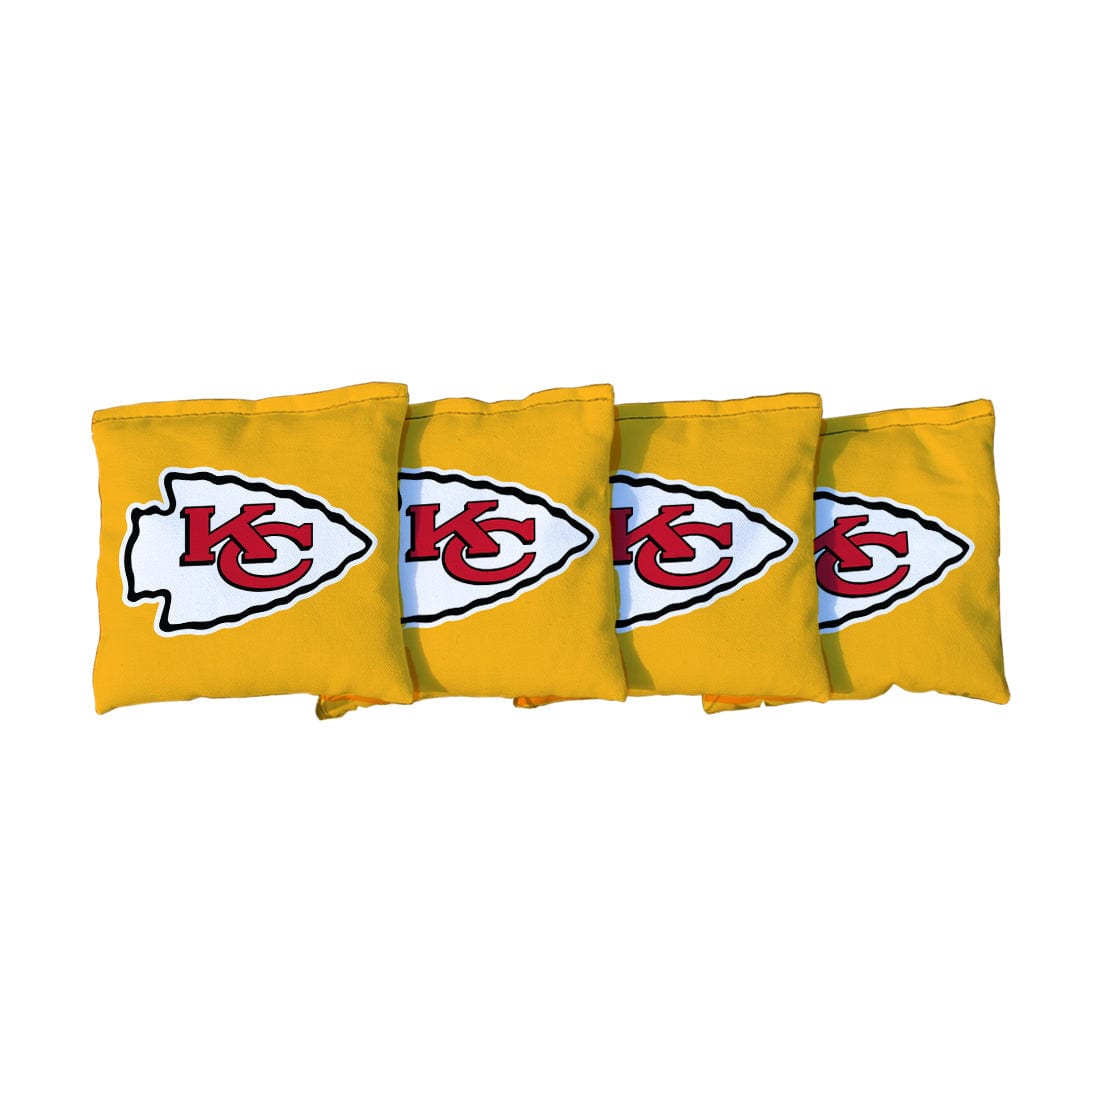 Kansas City Chiefs NFL Football Yellow Cornhole Bags